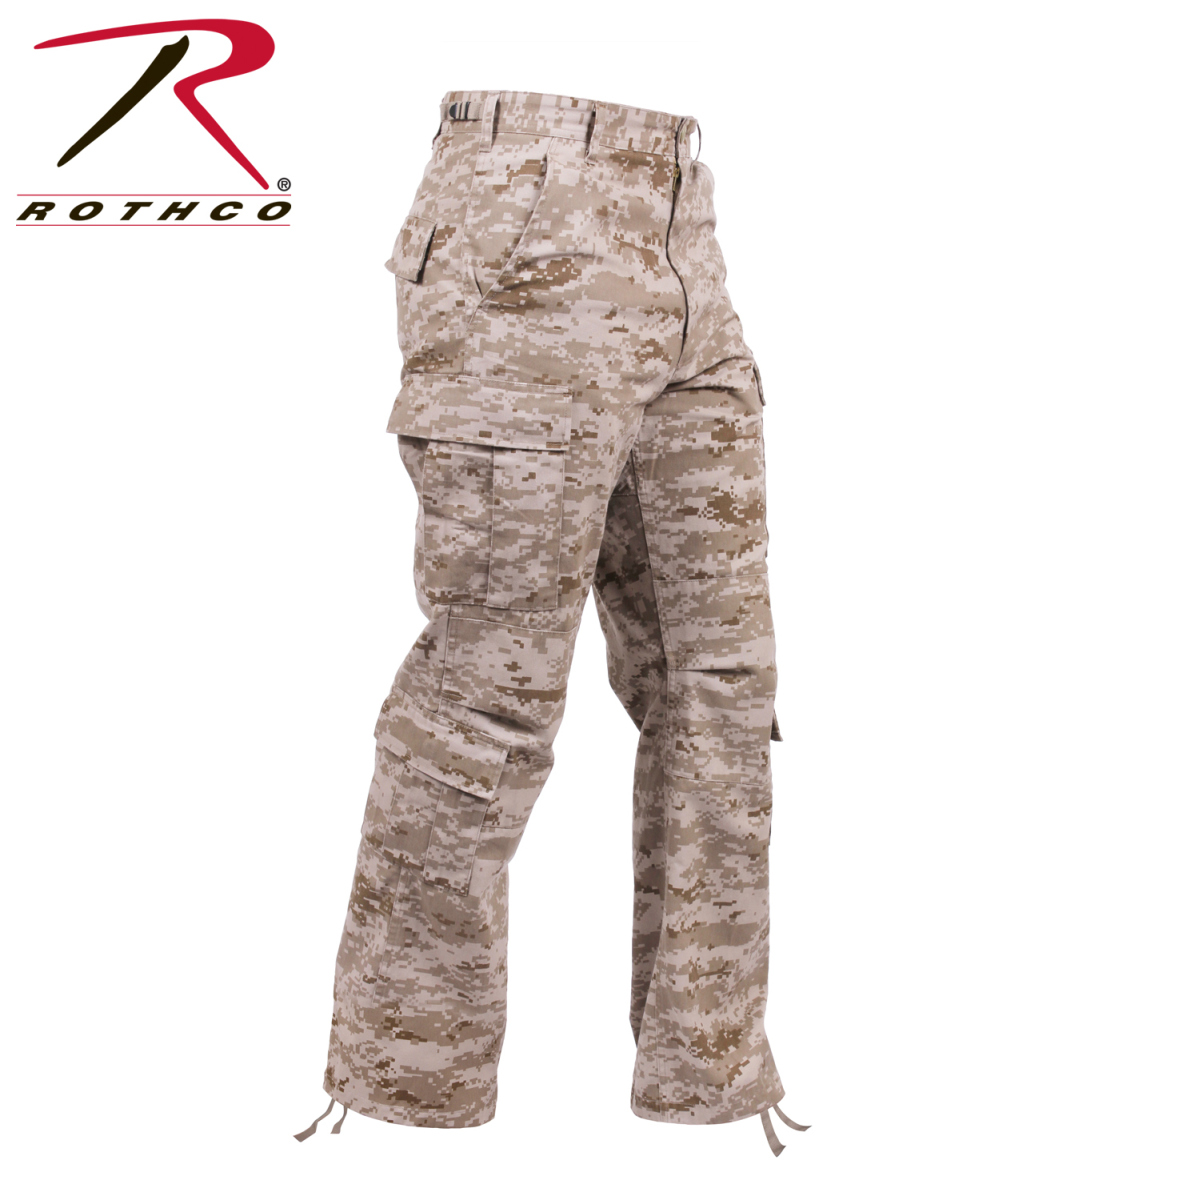 Refuge Camo Pants Women's Size 22 Green Camouflage Skinny Stretch | eBay